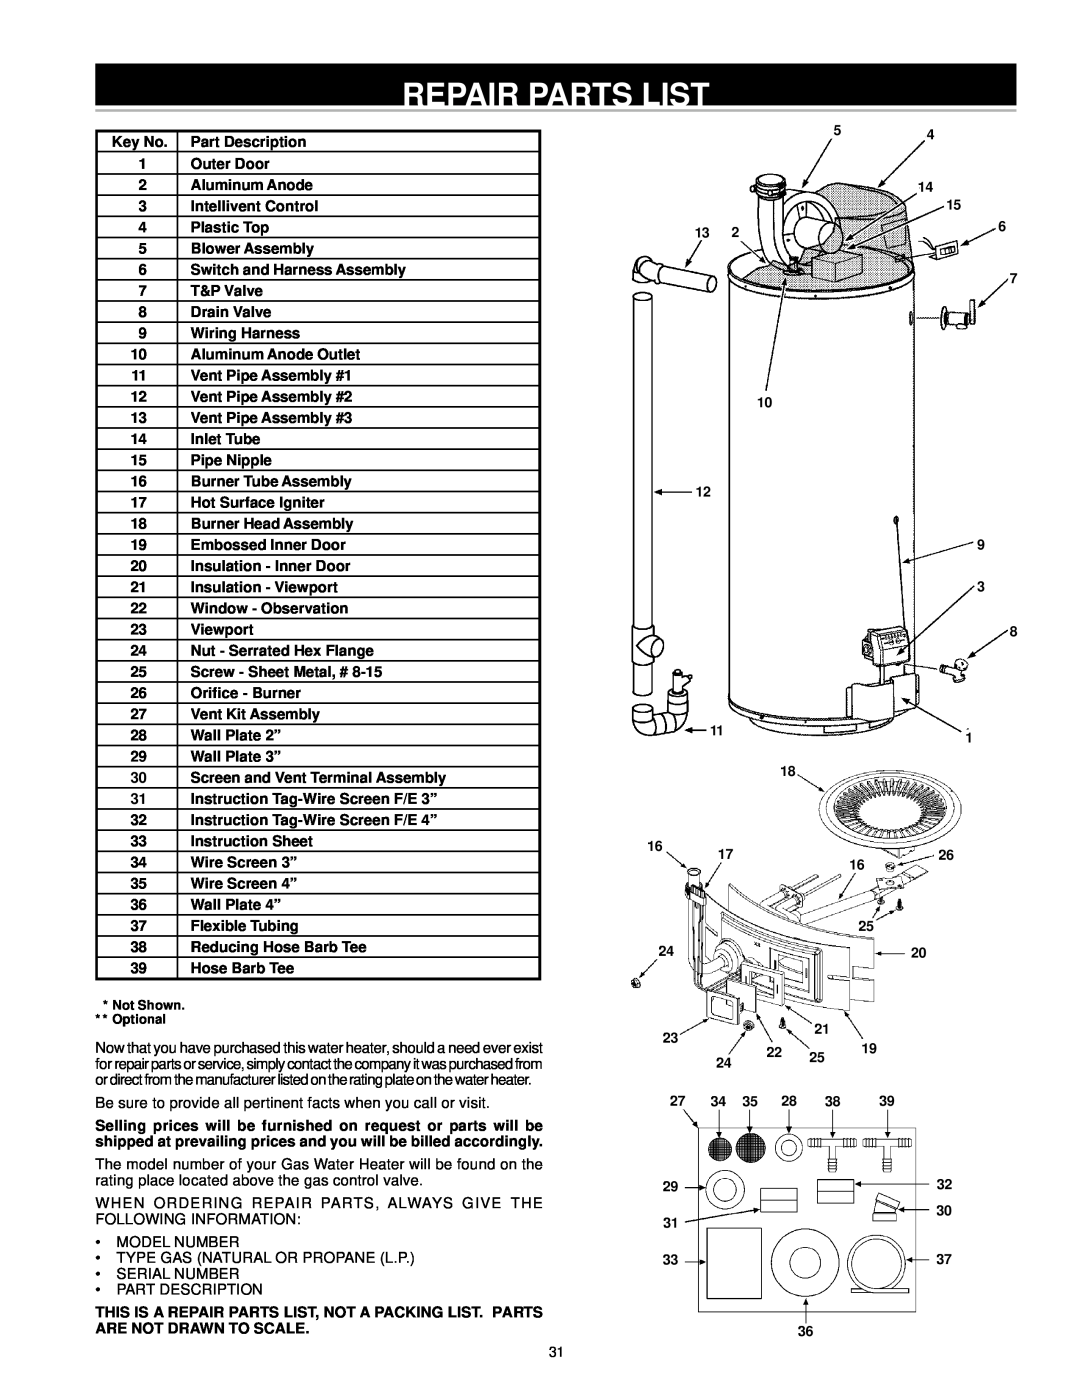 A.O. Smith ARGSS02708 Repair Parts List, Part Description, Outer Door, Aluminum Anode, Intellivent Control, Plastic Top 